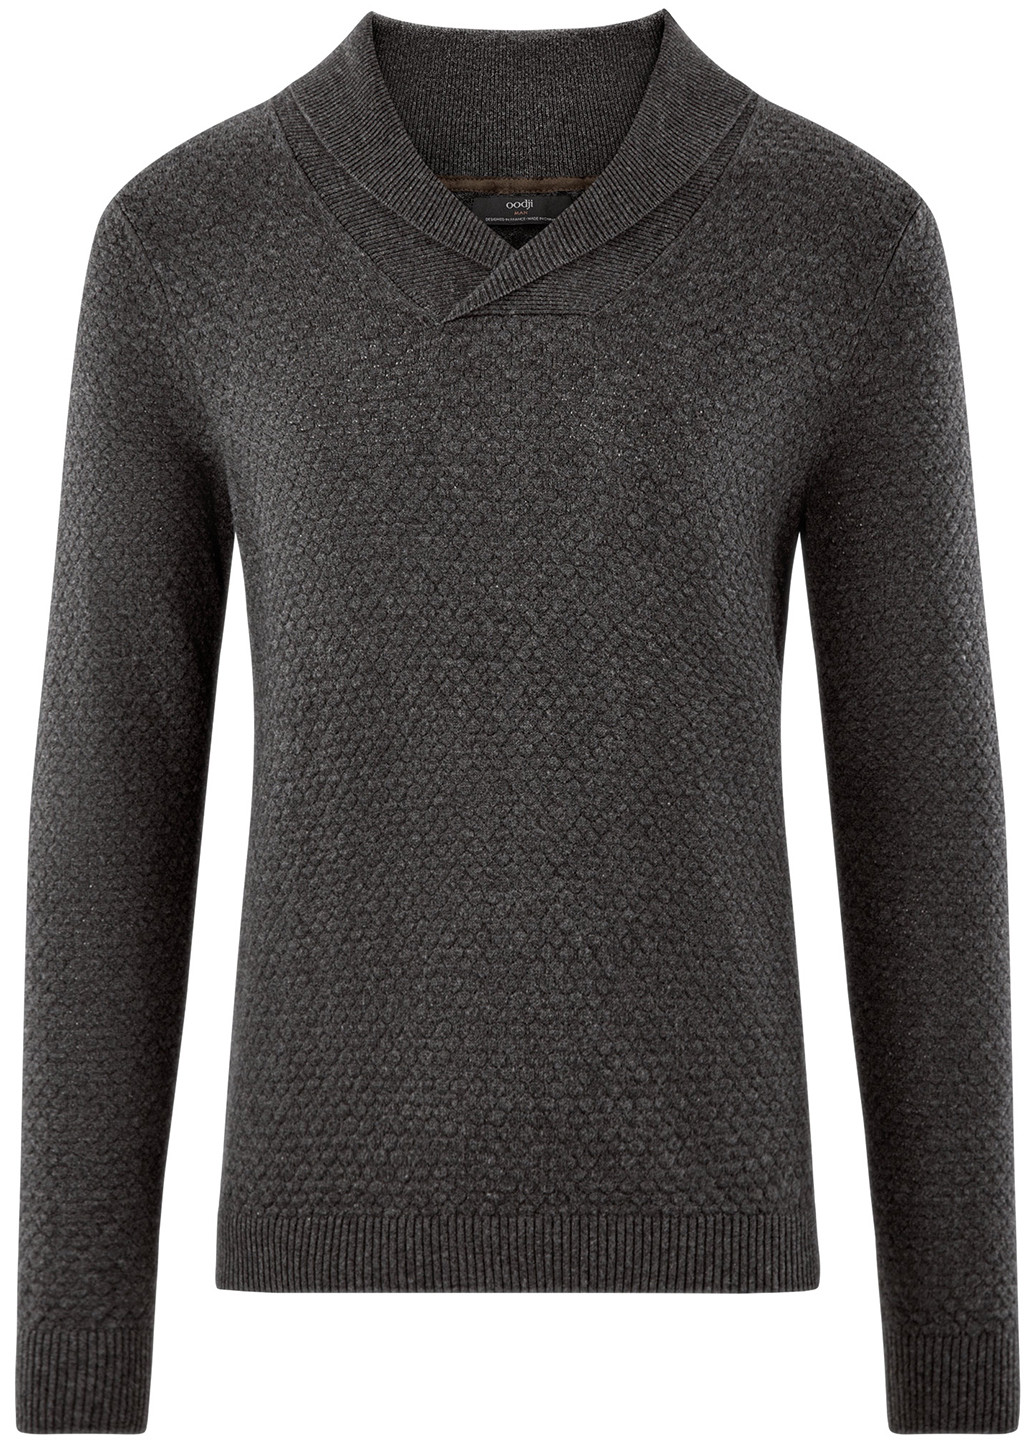 Темно-серый демисезонный пуловер пуловер Oodji